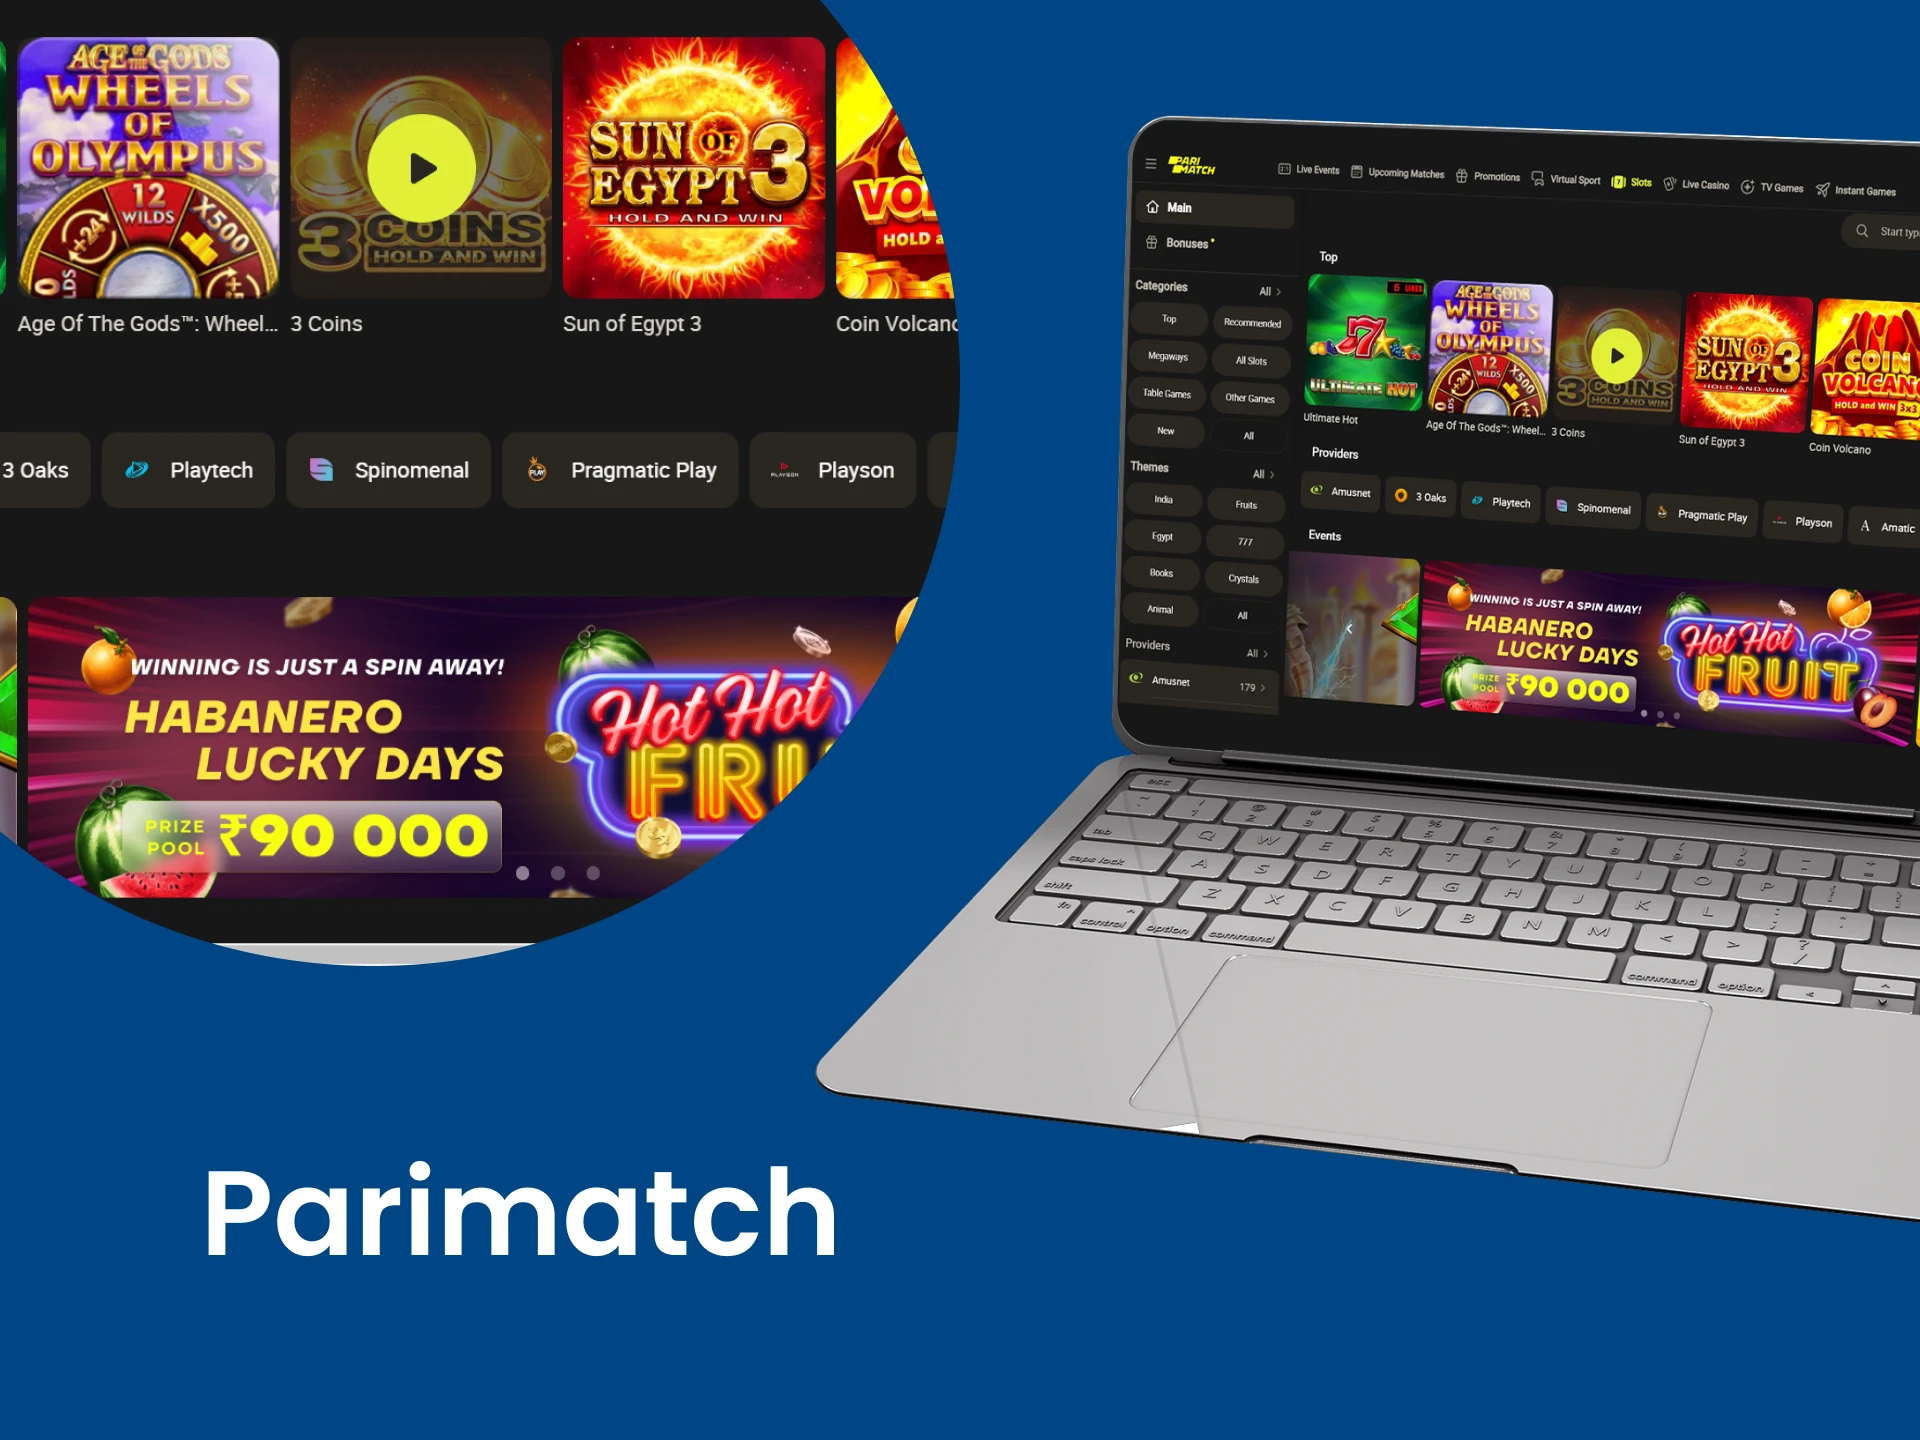 For casino games, choose Parimatch.